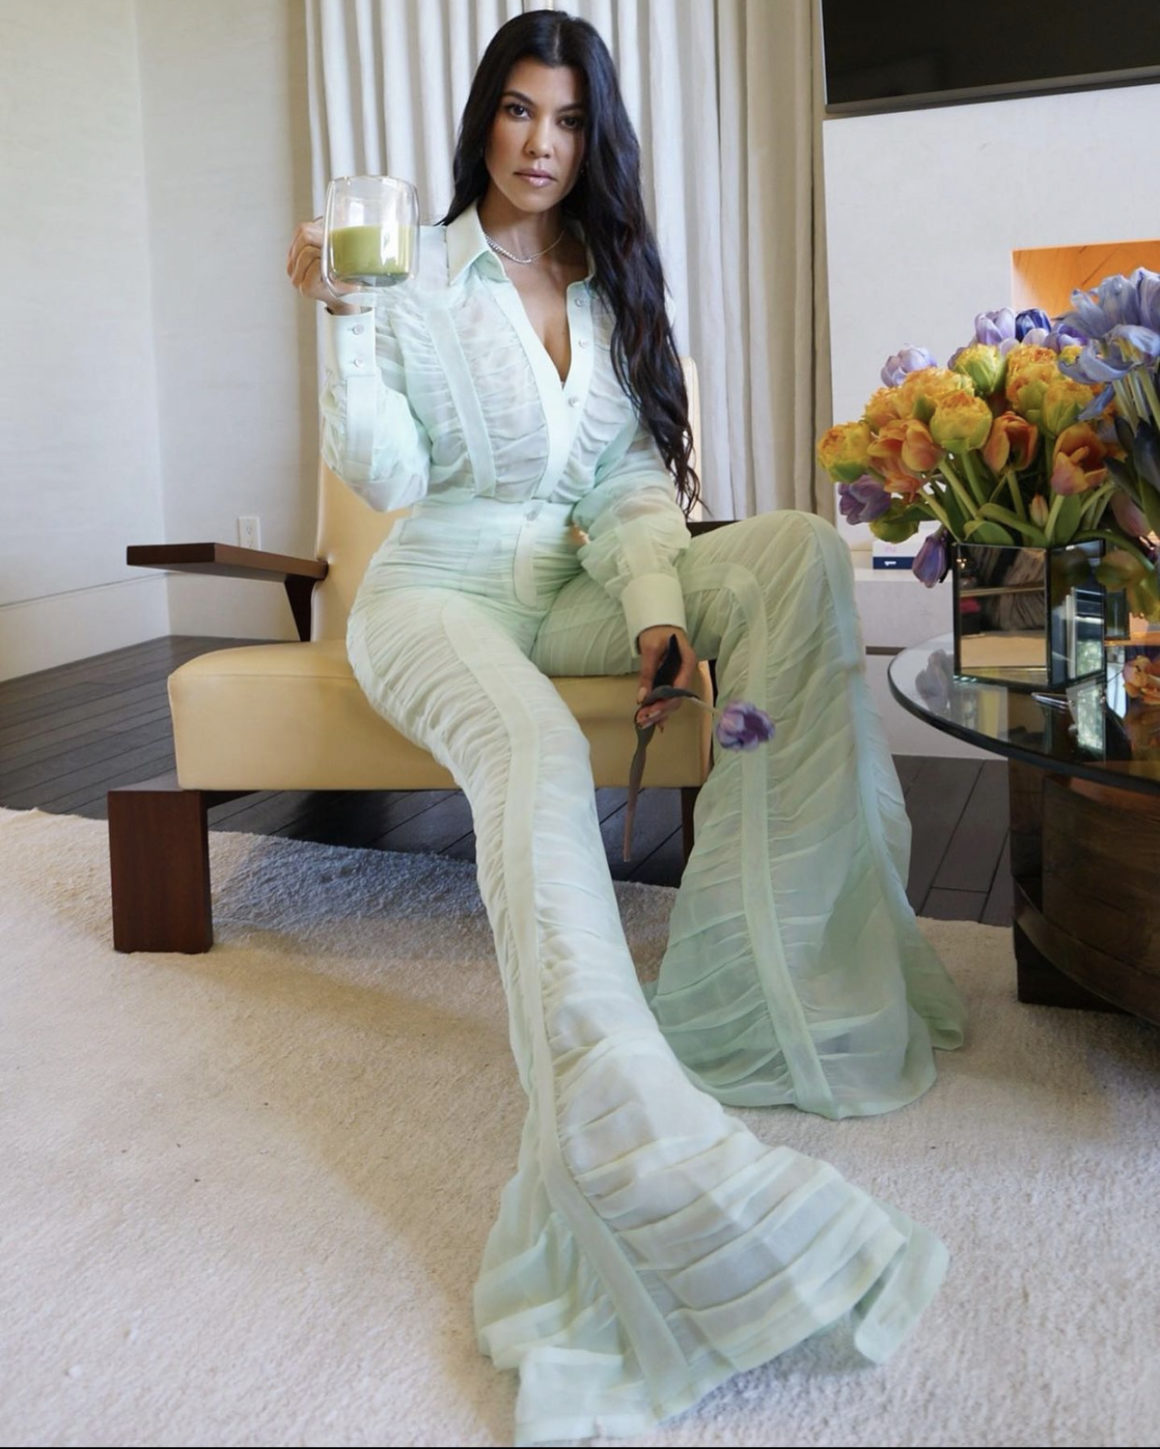 Kourtney-Kardashian-Promotes-Her-Poosh-Brand-Wearing-Mint-Green-Ruched